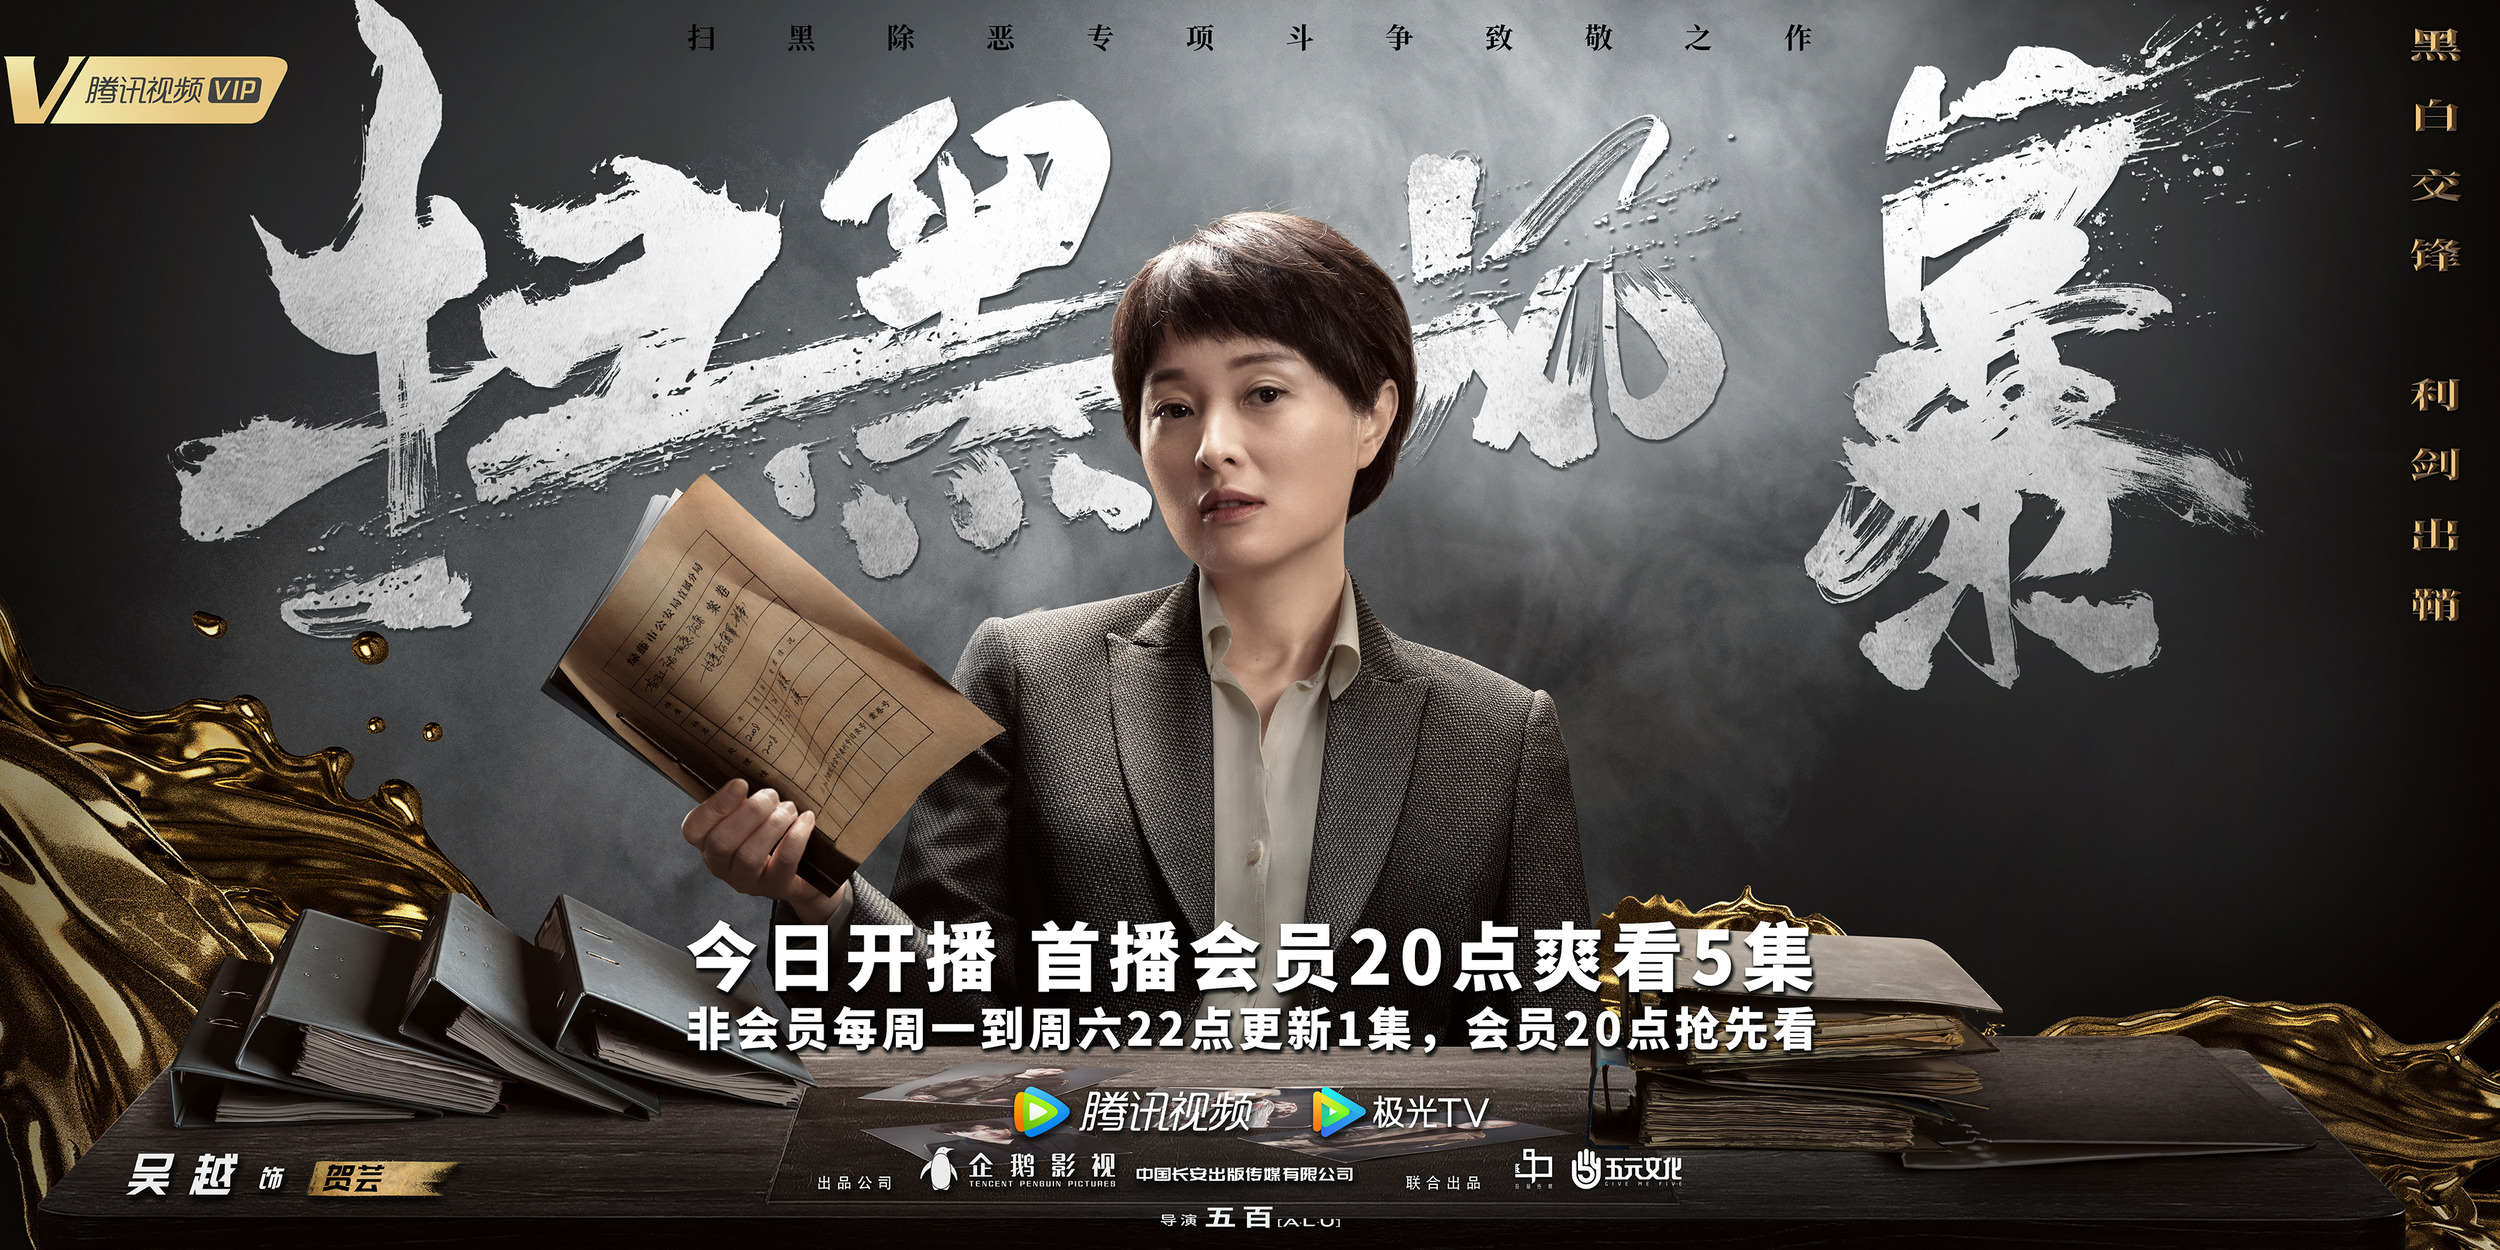 Mega Sized TV Poster Image for Sao hei feng bao (#2 of 9)